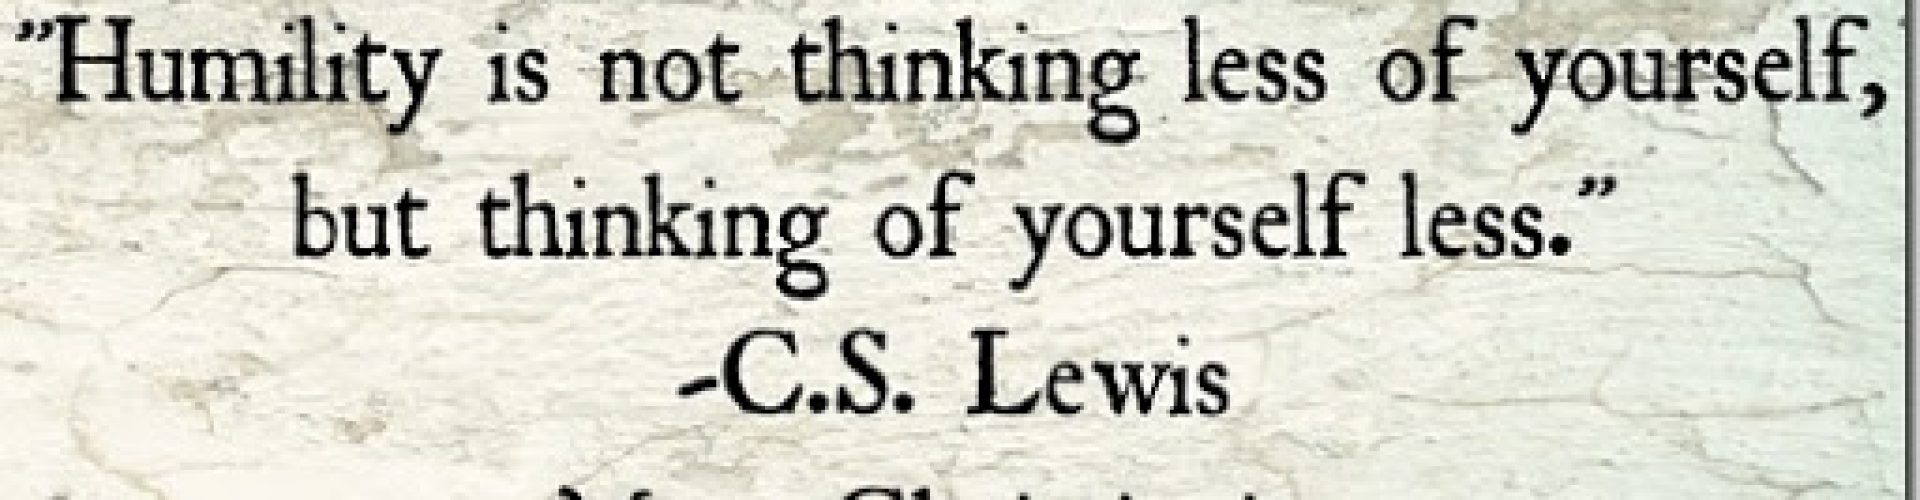 CS Lewis - Humility quote